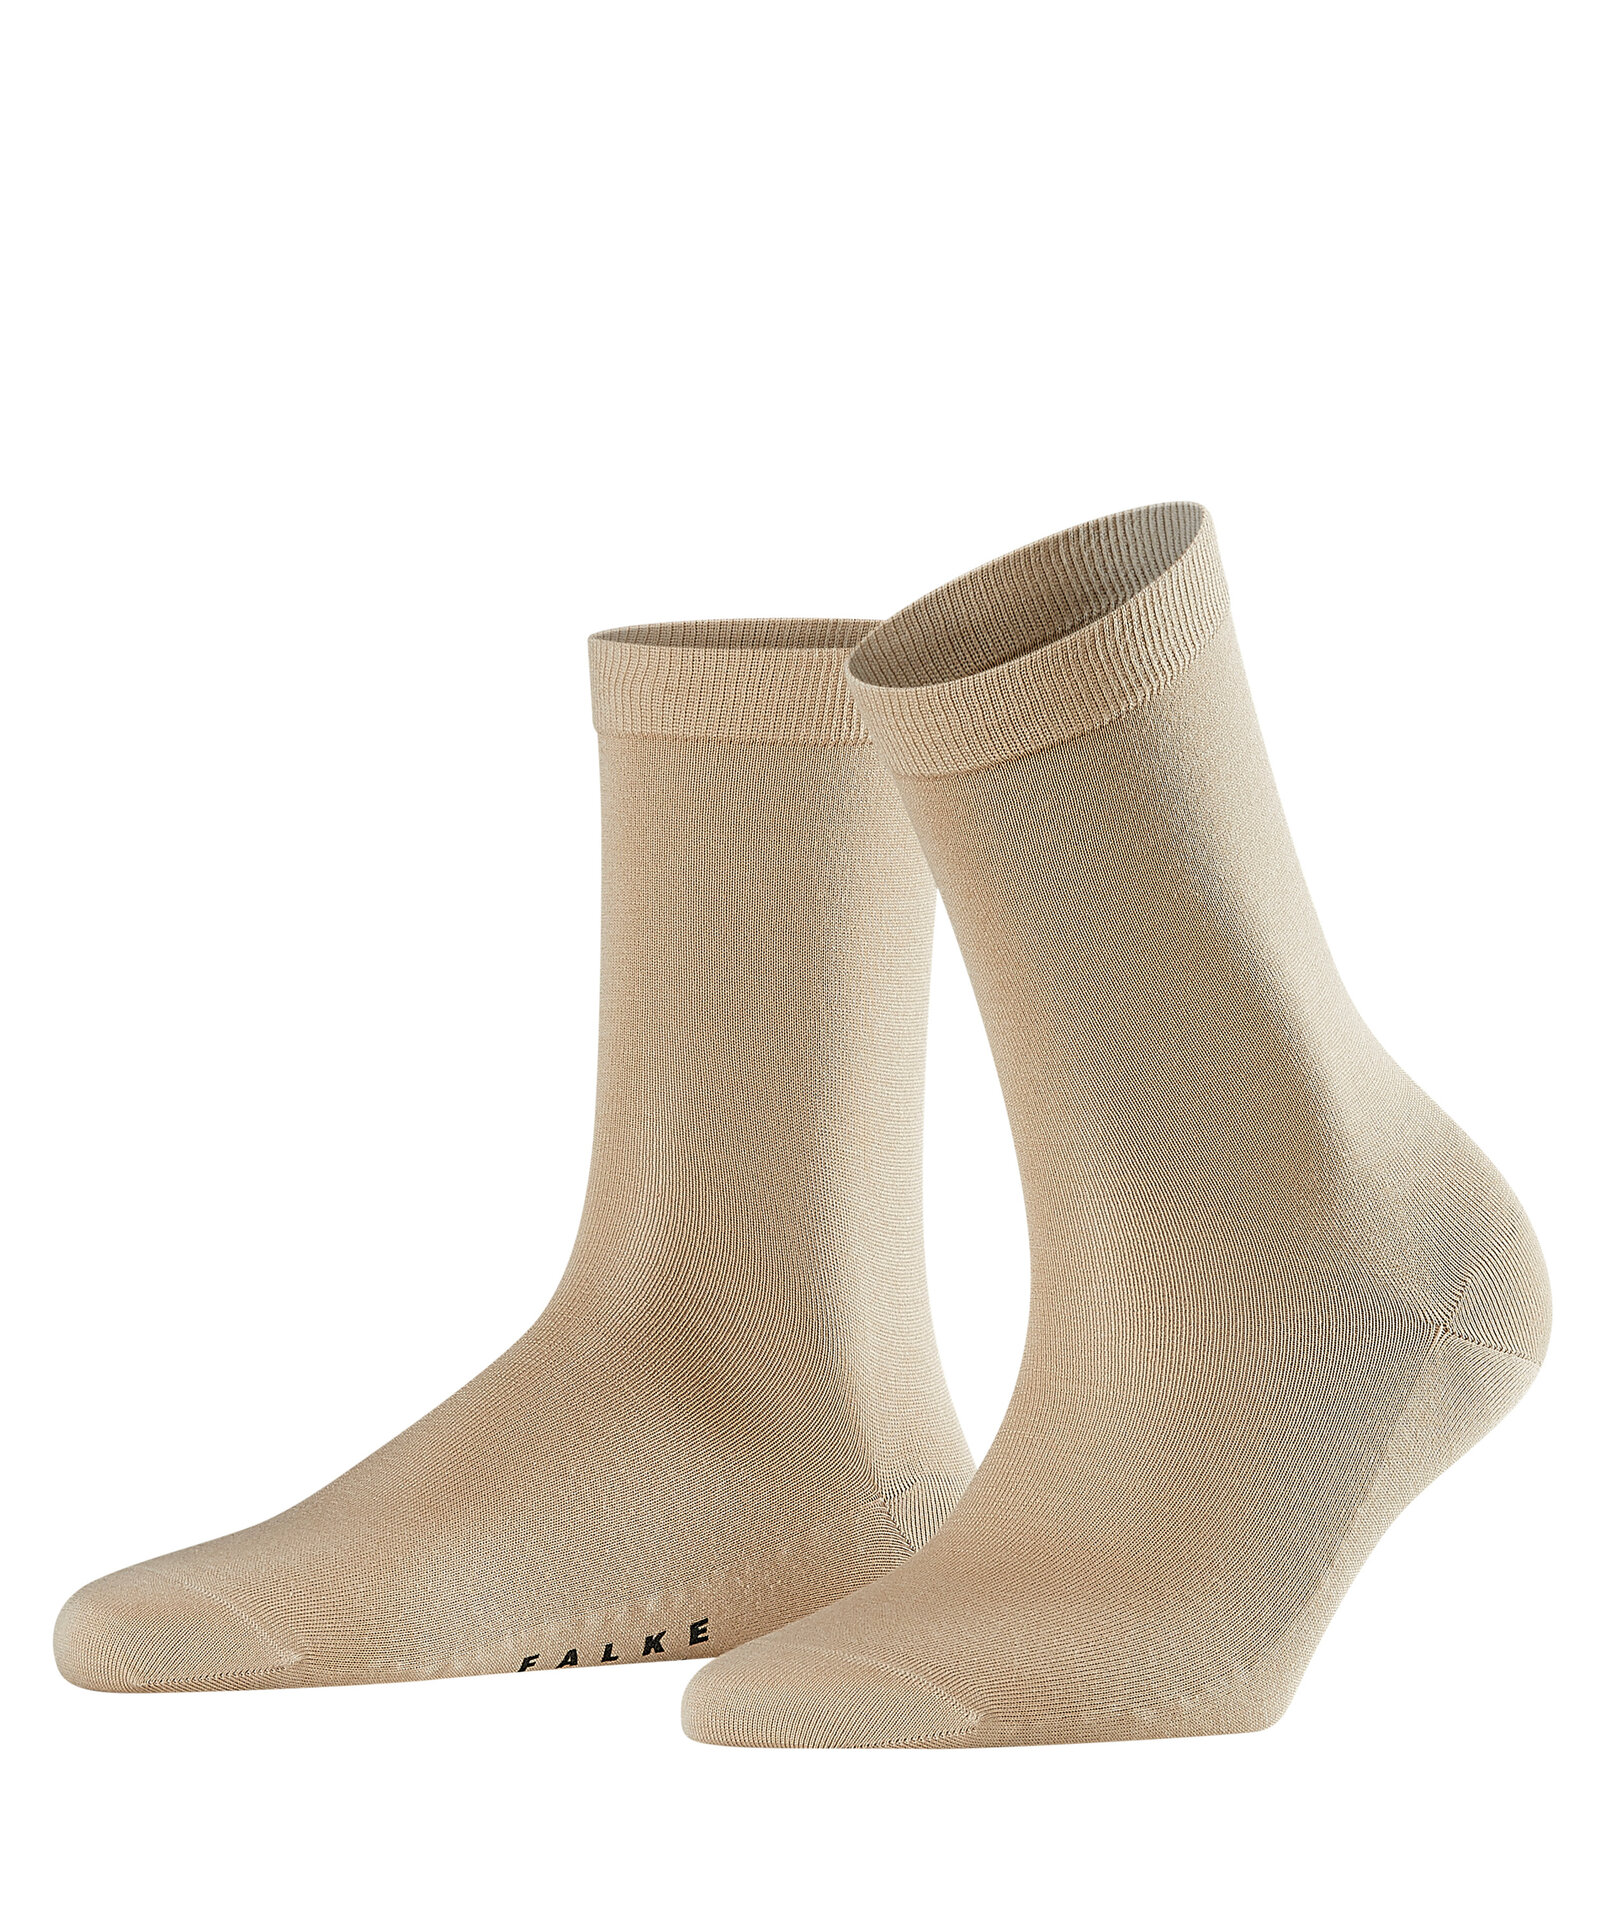 Falke Sensual Silk Damen Socken